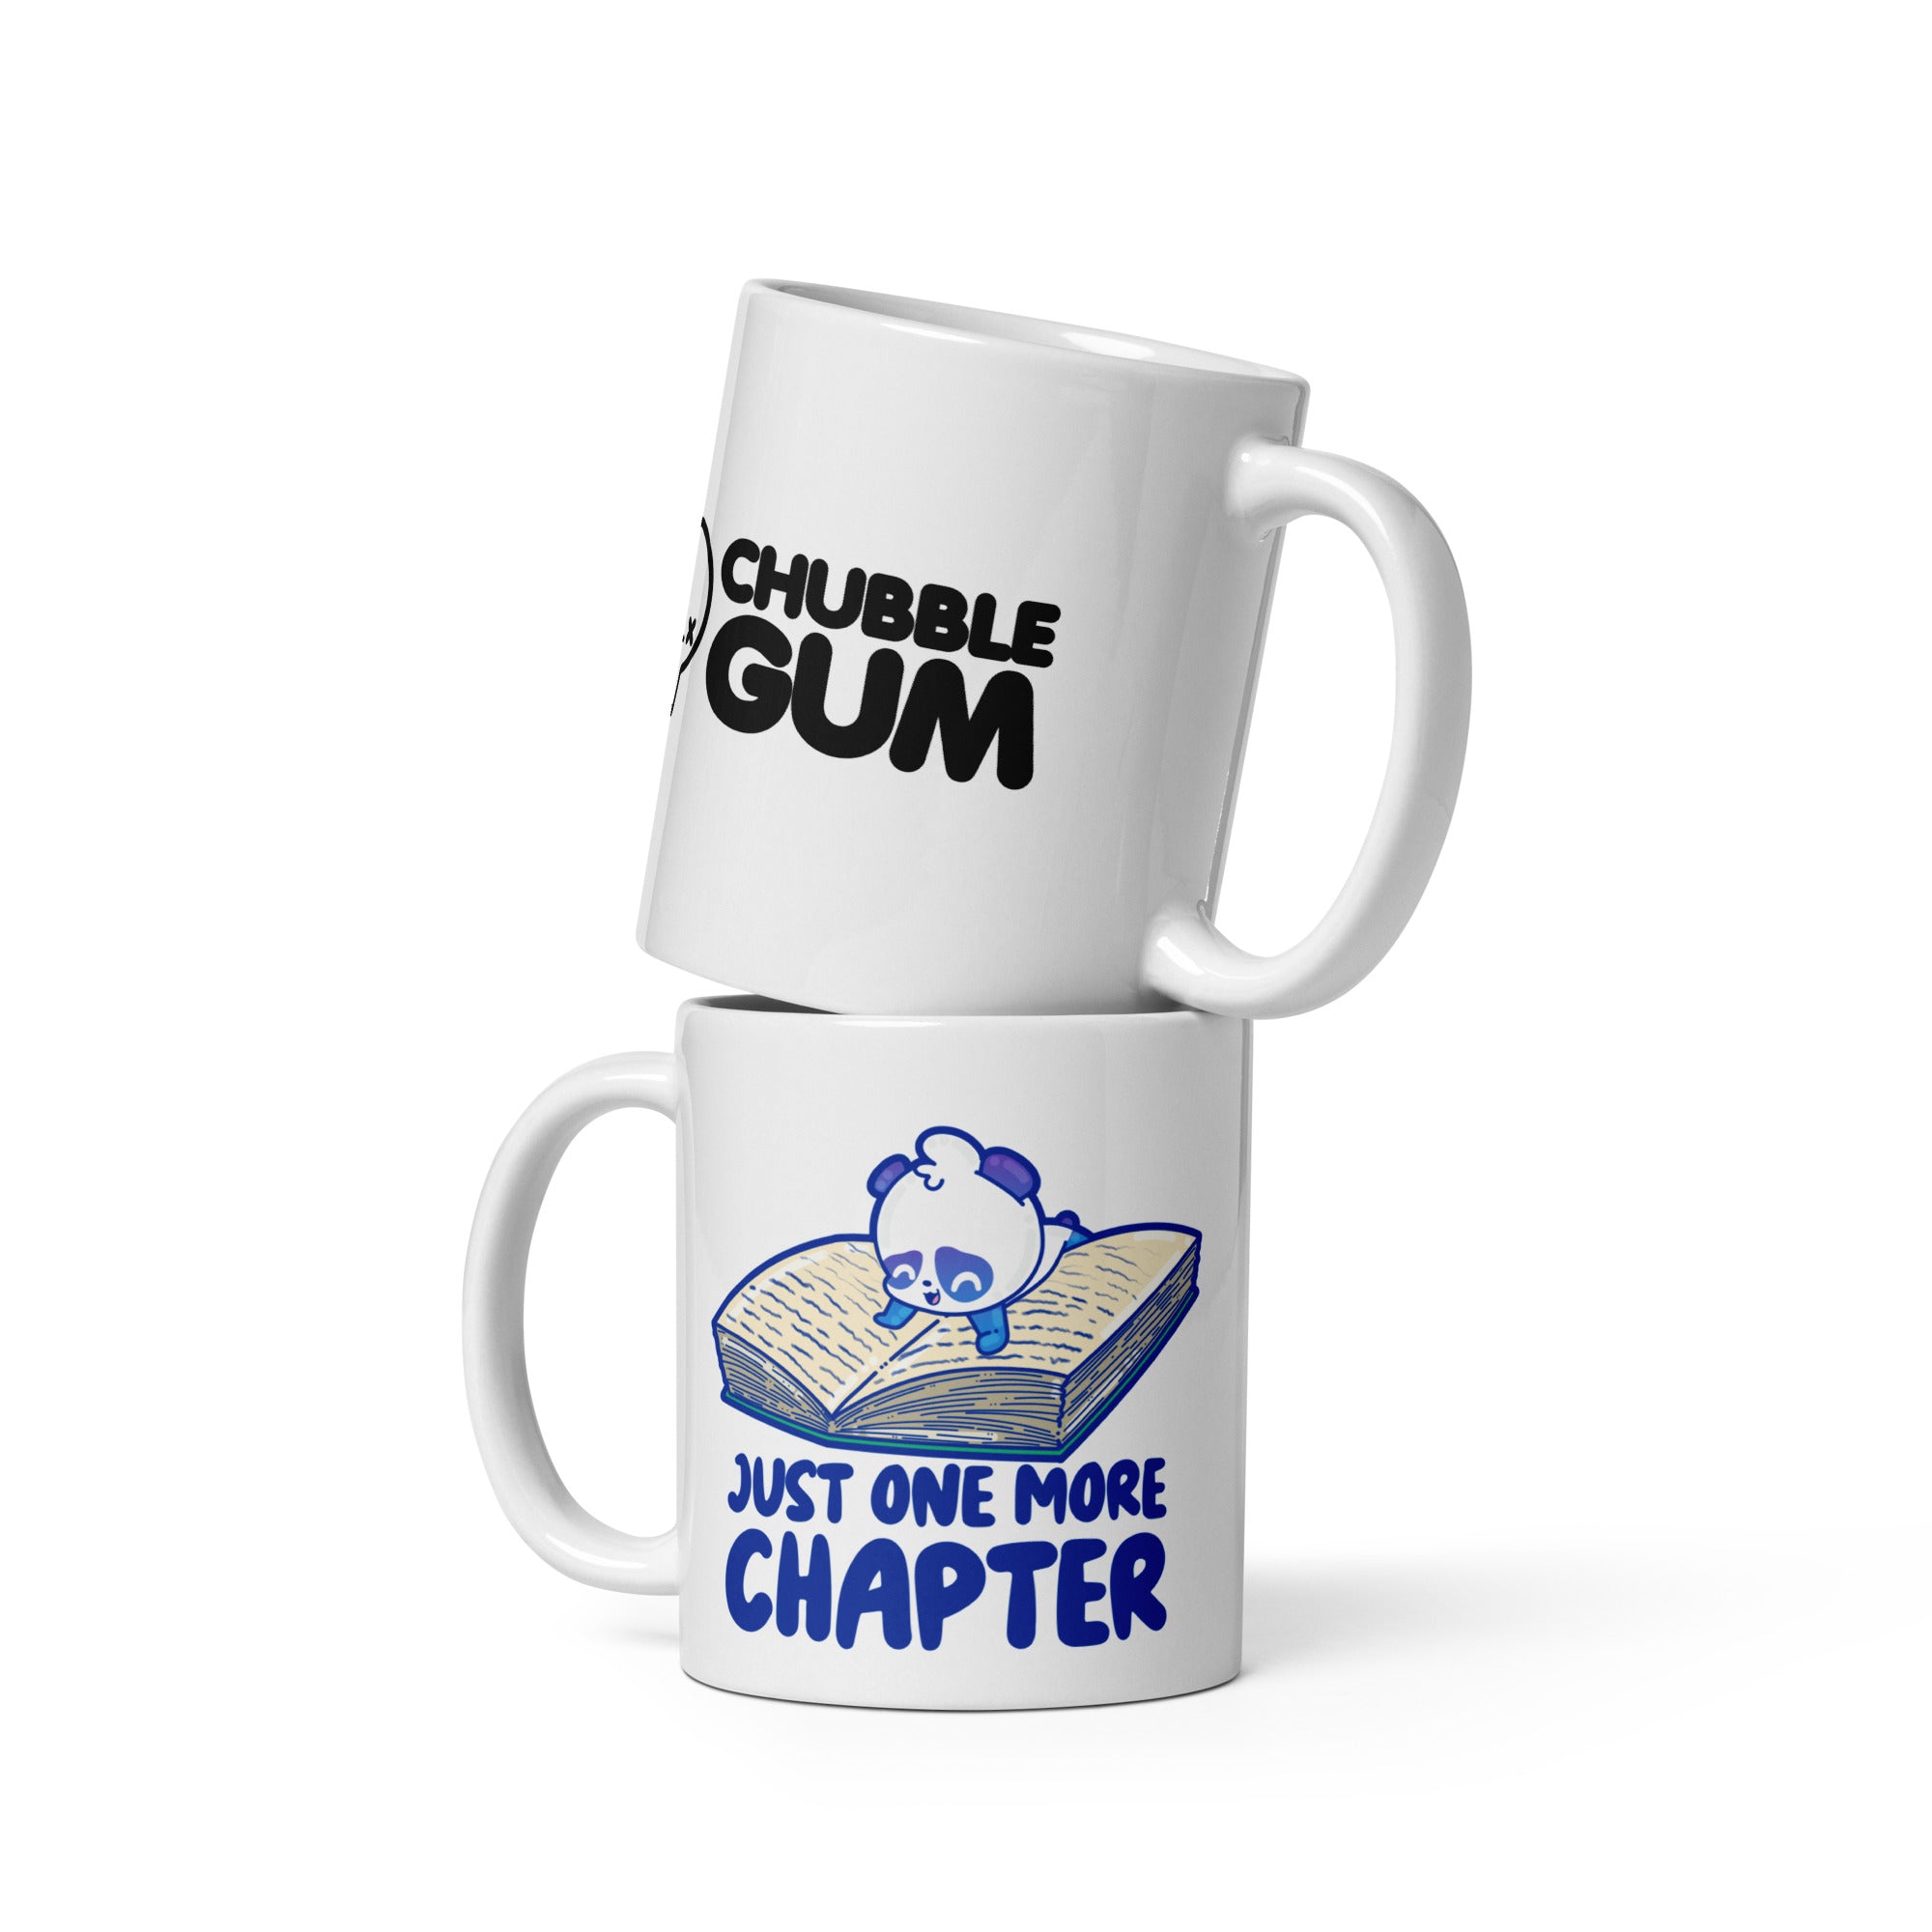 JUST ONE MORE CHAPTER - Coffee Mug - ChubbleGumLLC